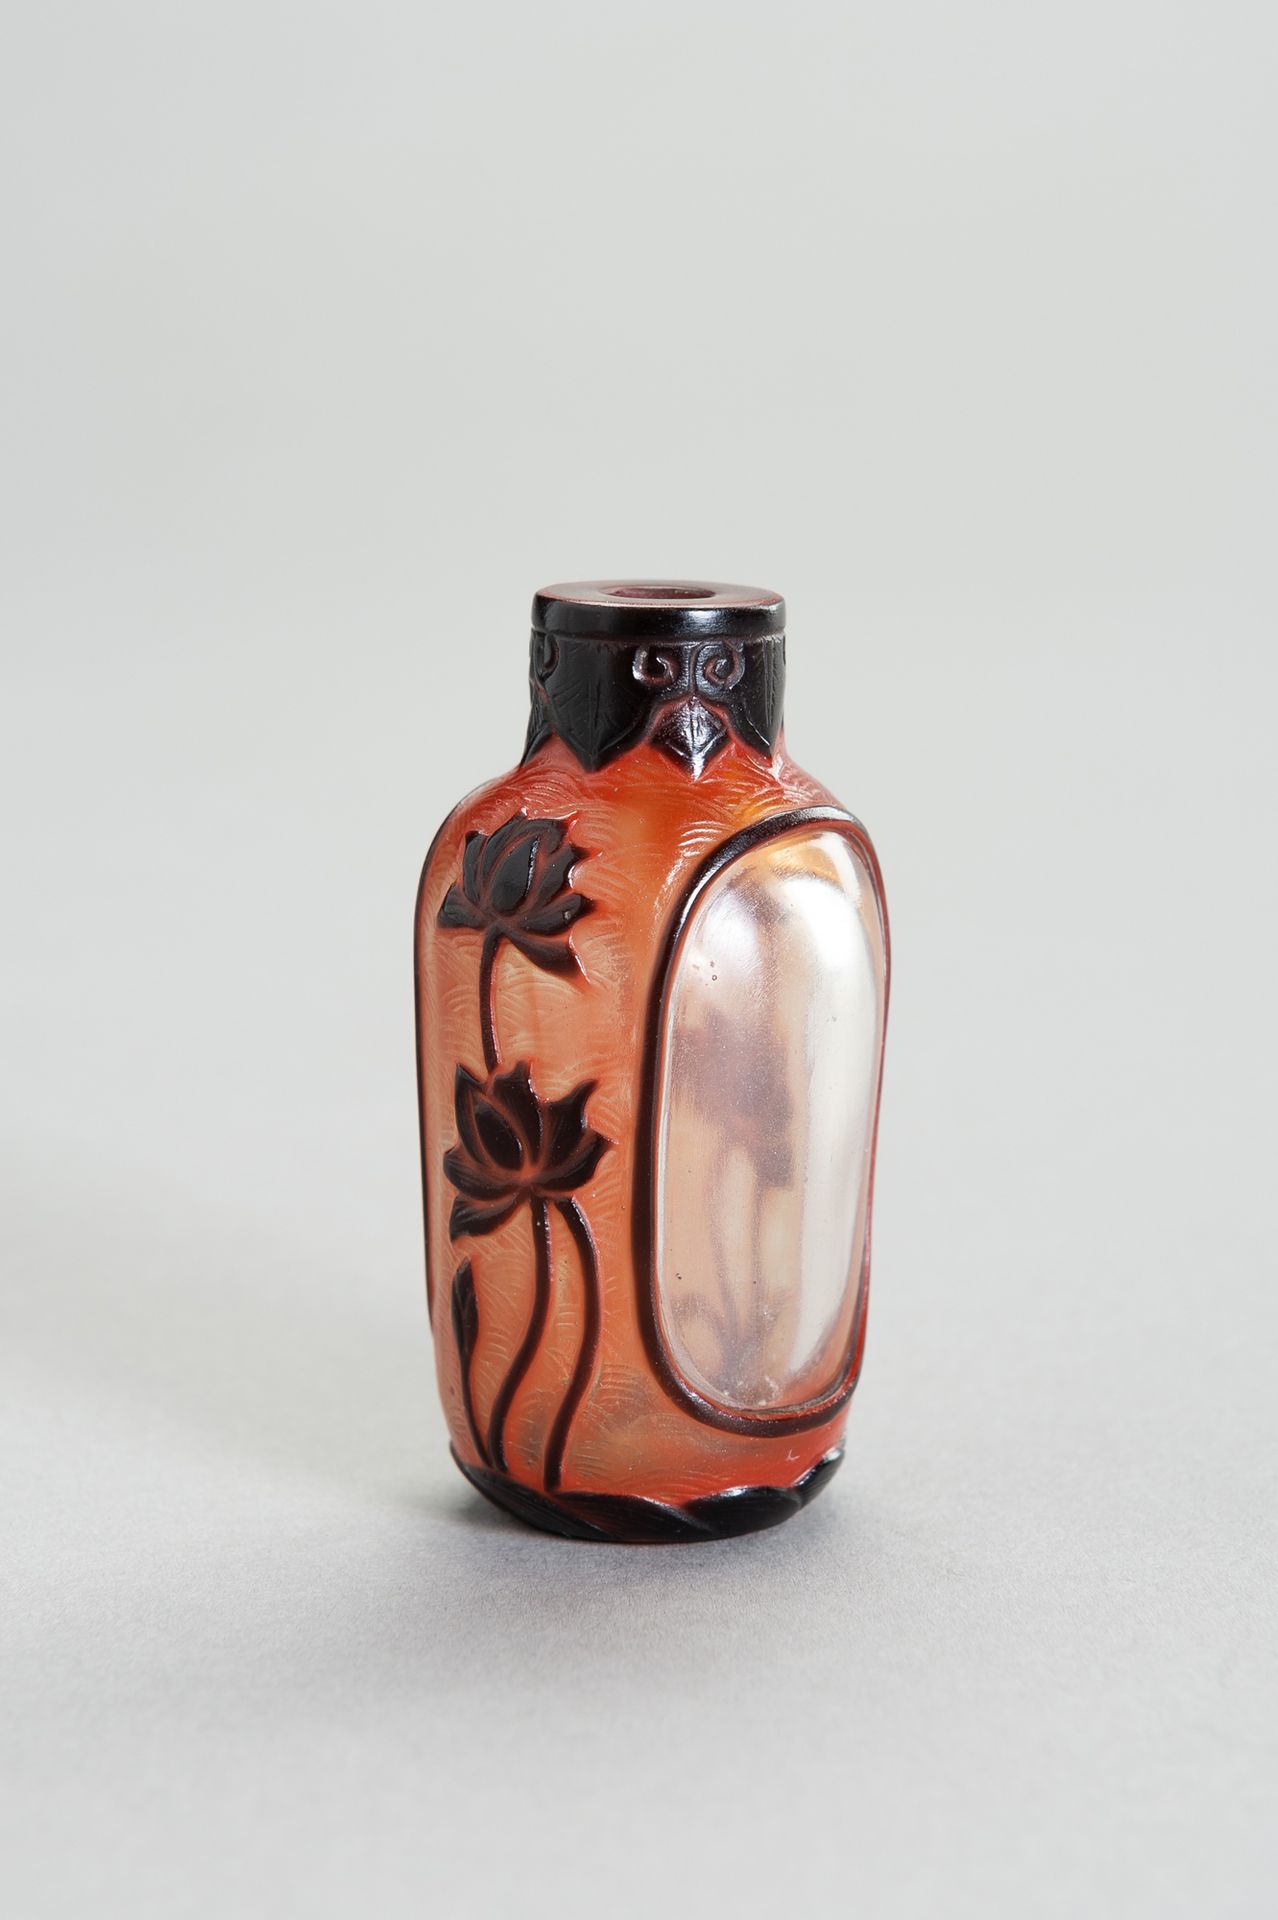 AN OVERLAY GLASS SNUFF BOTTLE BOTTIGLIADA SNUFF
Cina,XIX secolo. Bottiglia da ta&hellip;